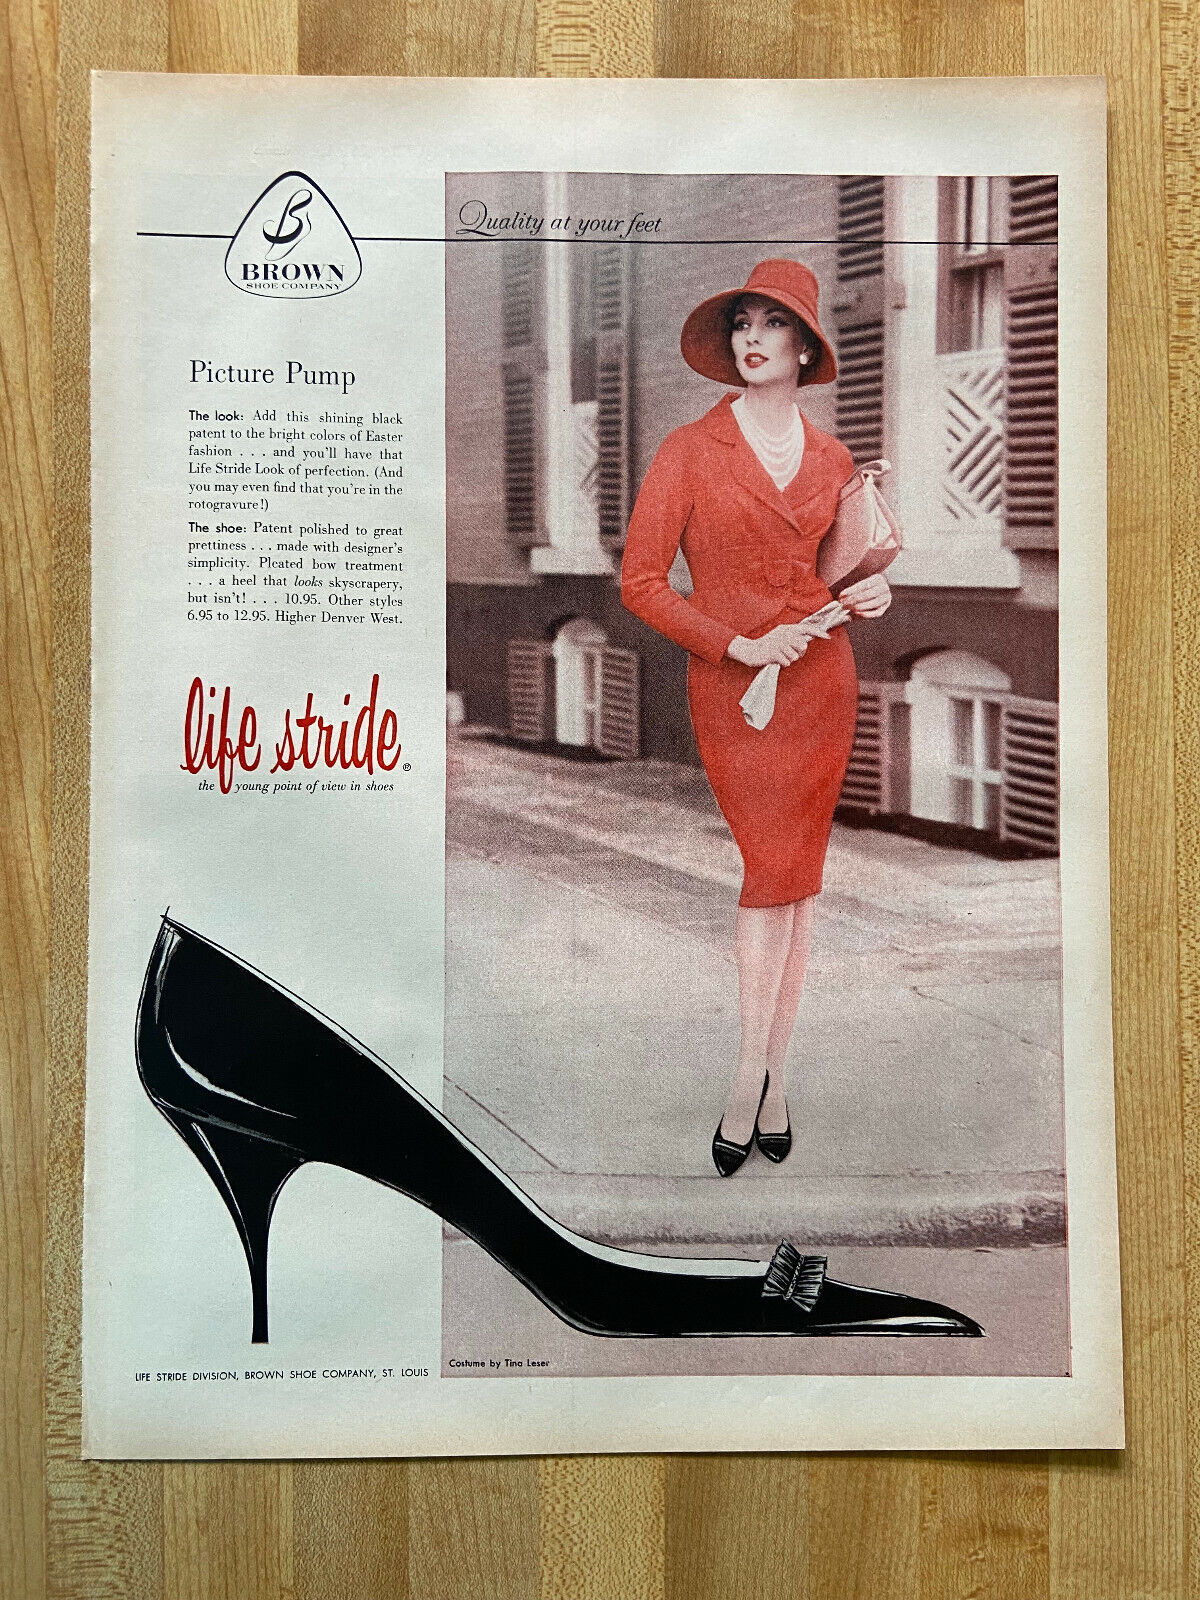 Vintage 1959 Life Stride Brown Shoe Co Print Ad Stiletto Heels Woman Advertising